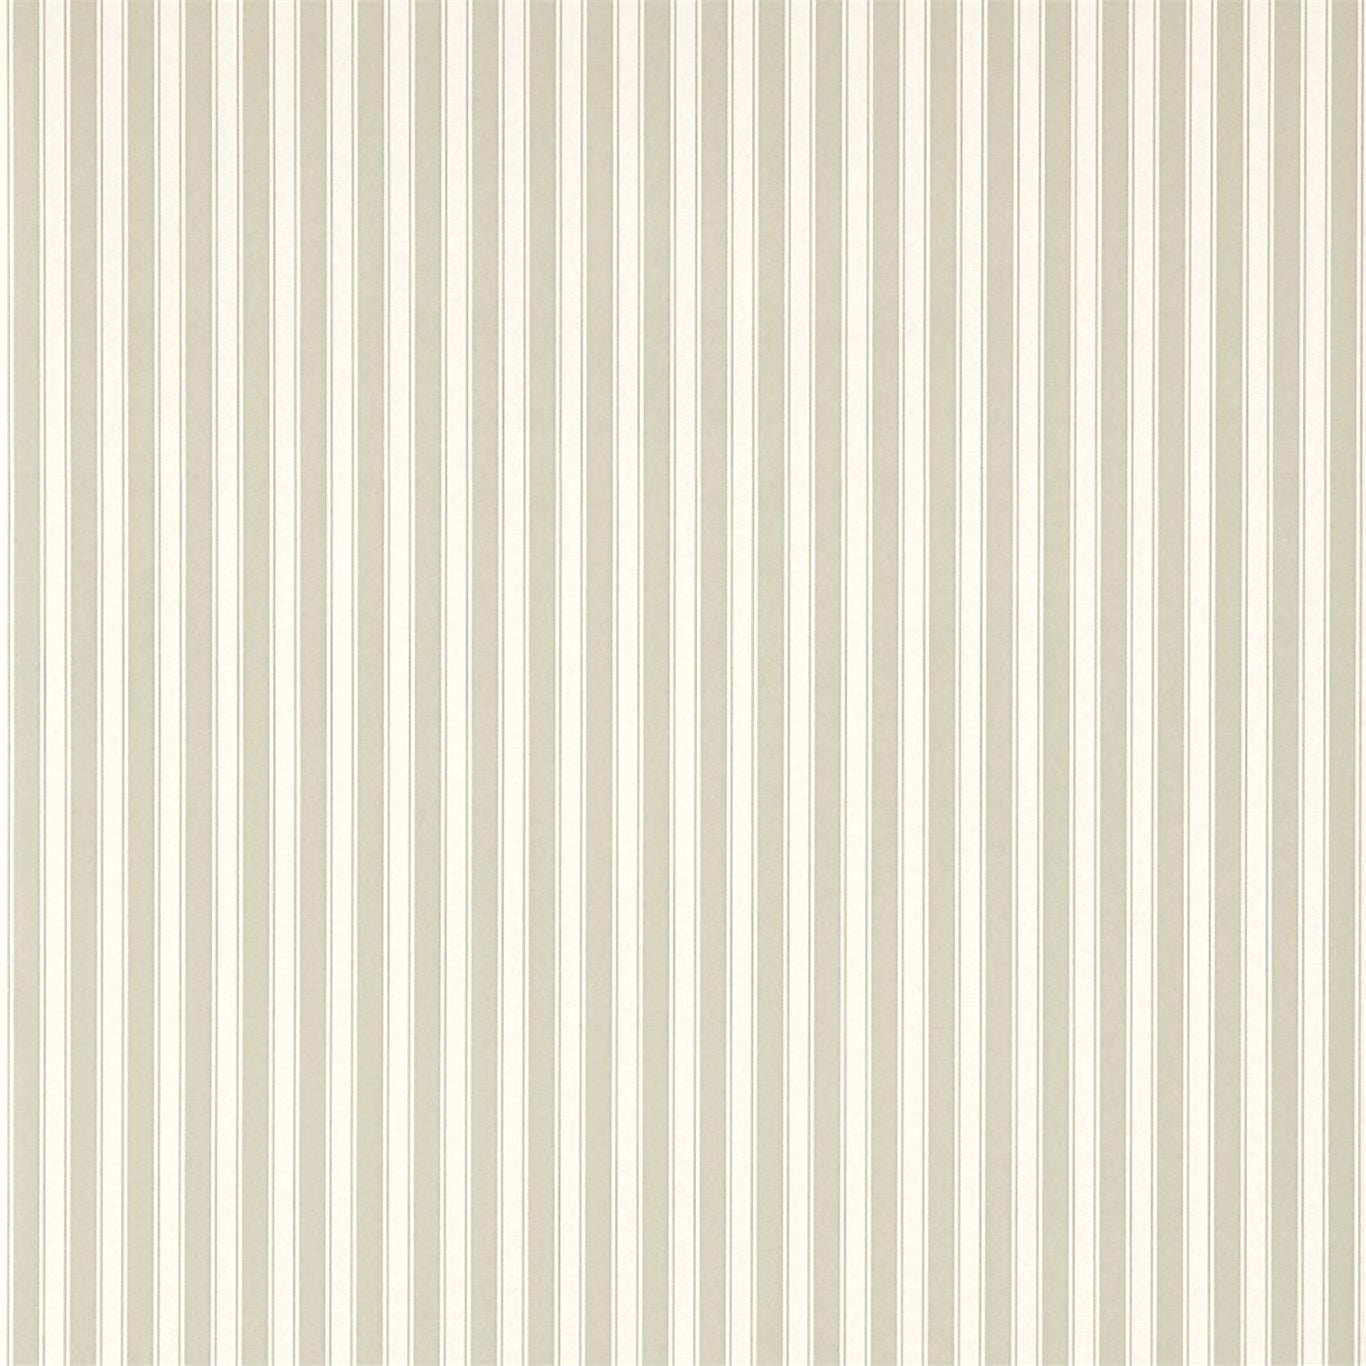 New Tiger Stripe Wallpaper by Sanderson